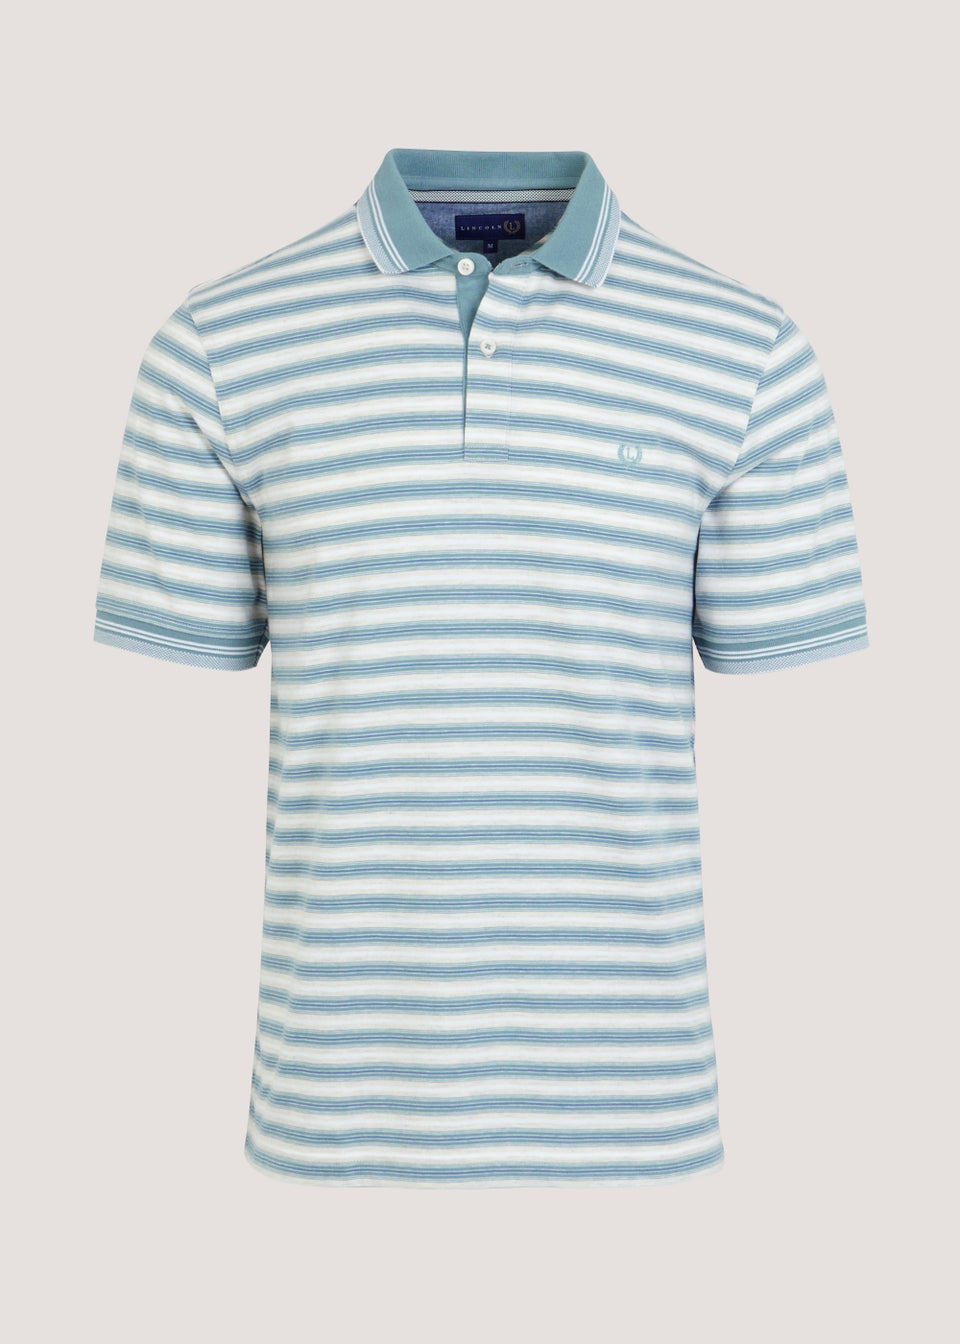 Lincoln Green Stripe Polo Shirt - Matalan